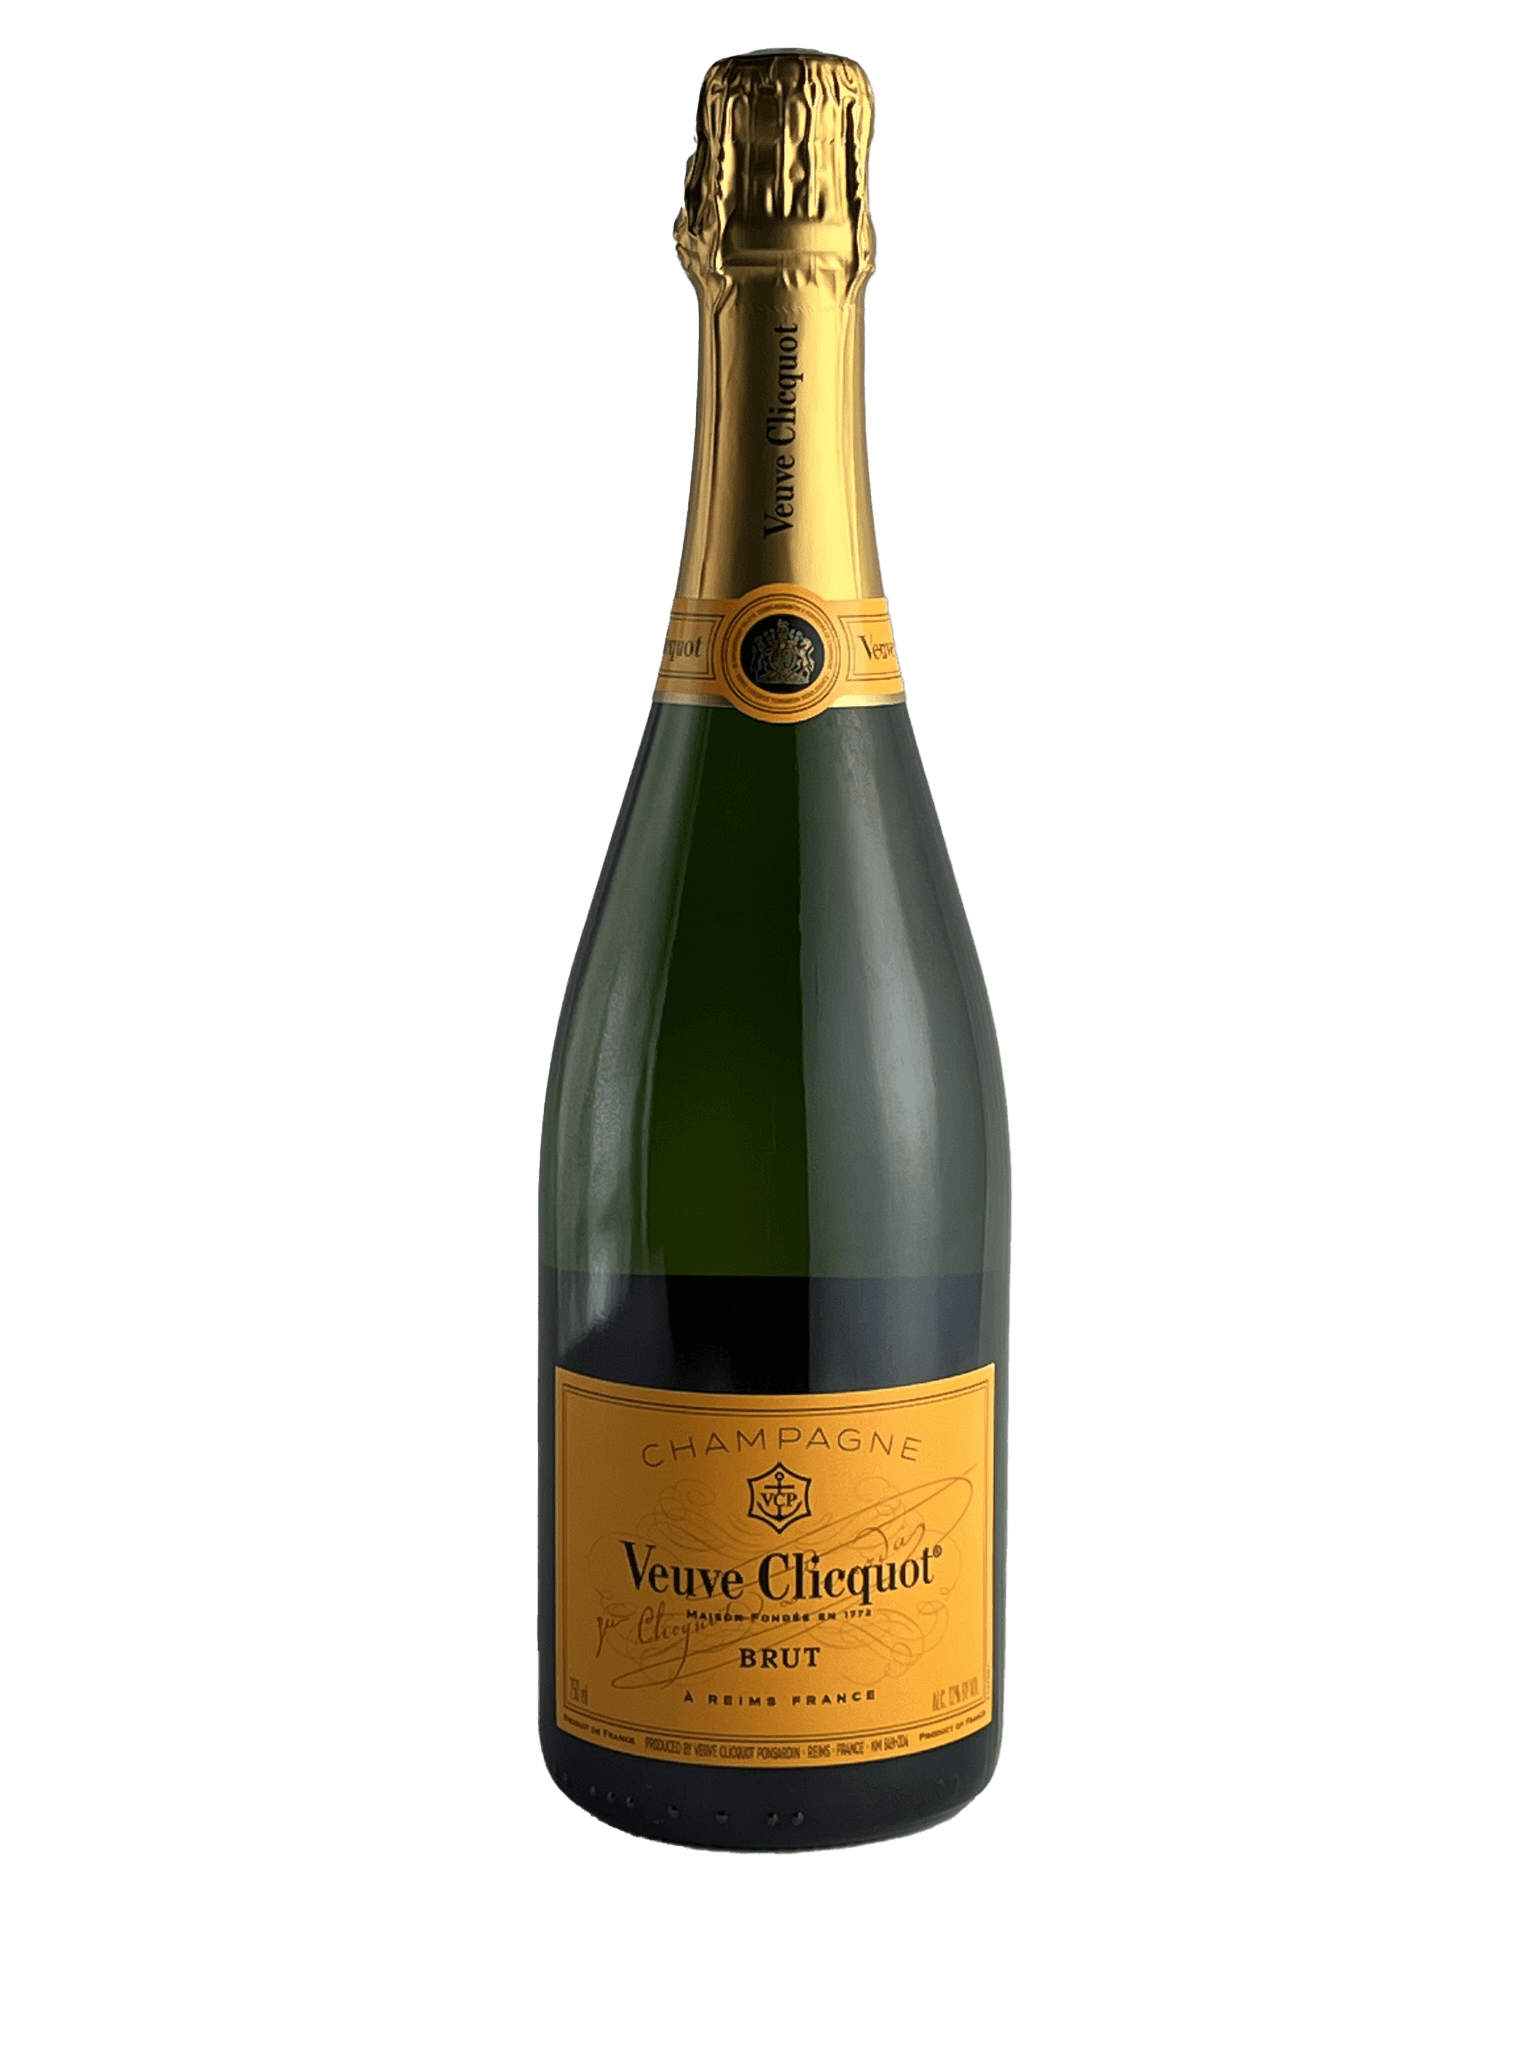 NV Veuve Clicquot Rich Doux 750mL - Wally's Wine & Spirits